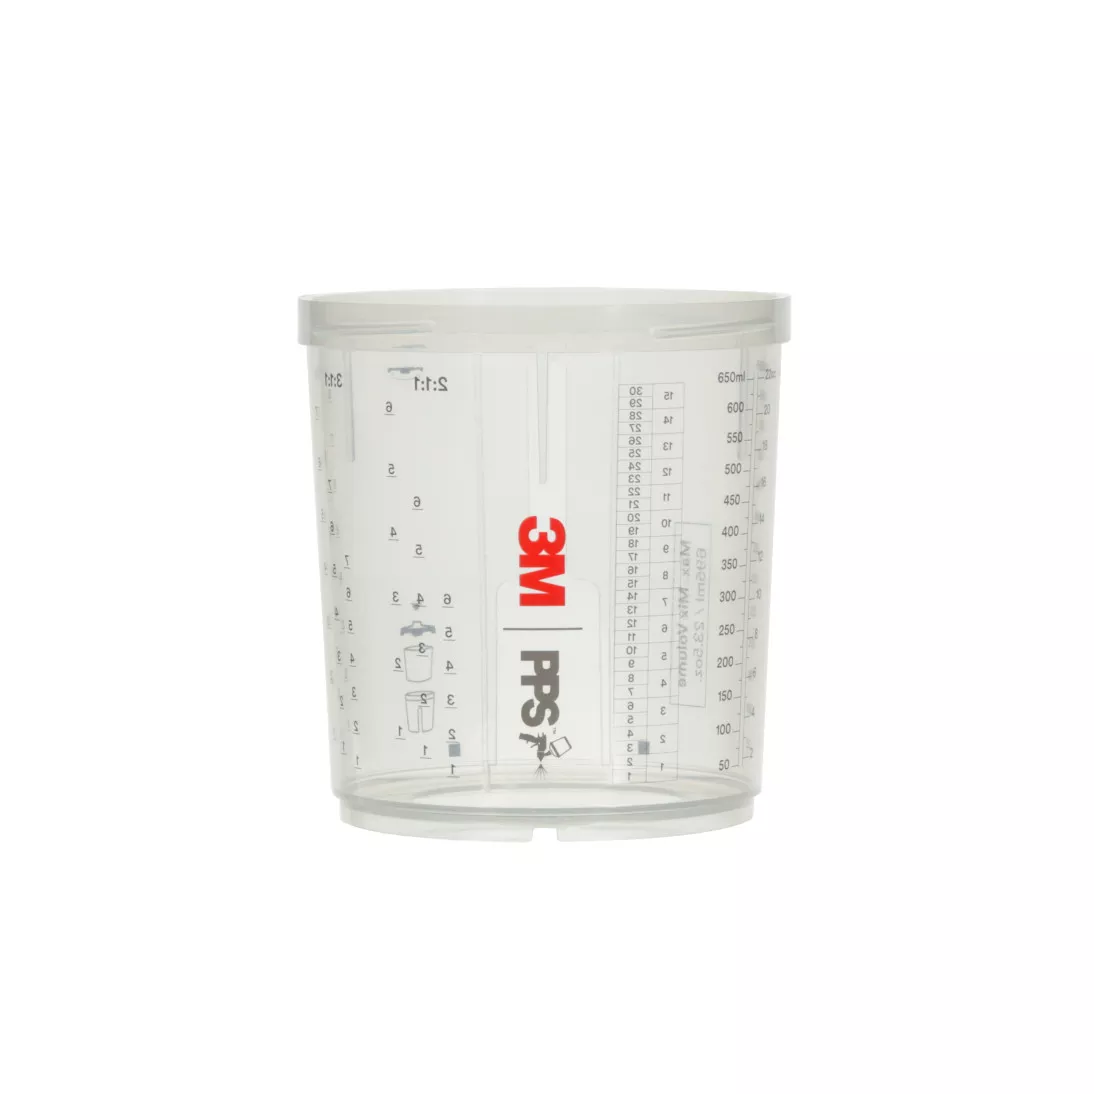 3M™ PPS™ Series 2.0 Cup, 26001, Standard (22 fl oz, 650 mL), 2 cups per
carton, 4 cartons per case